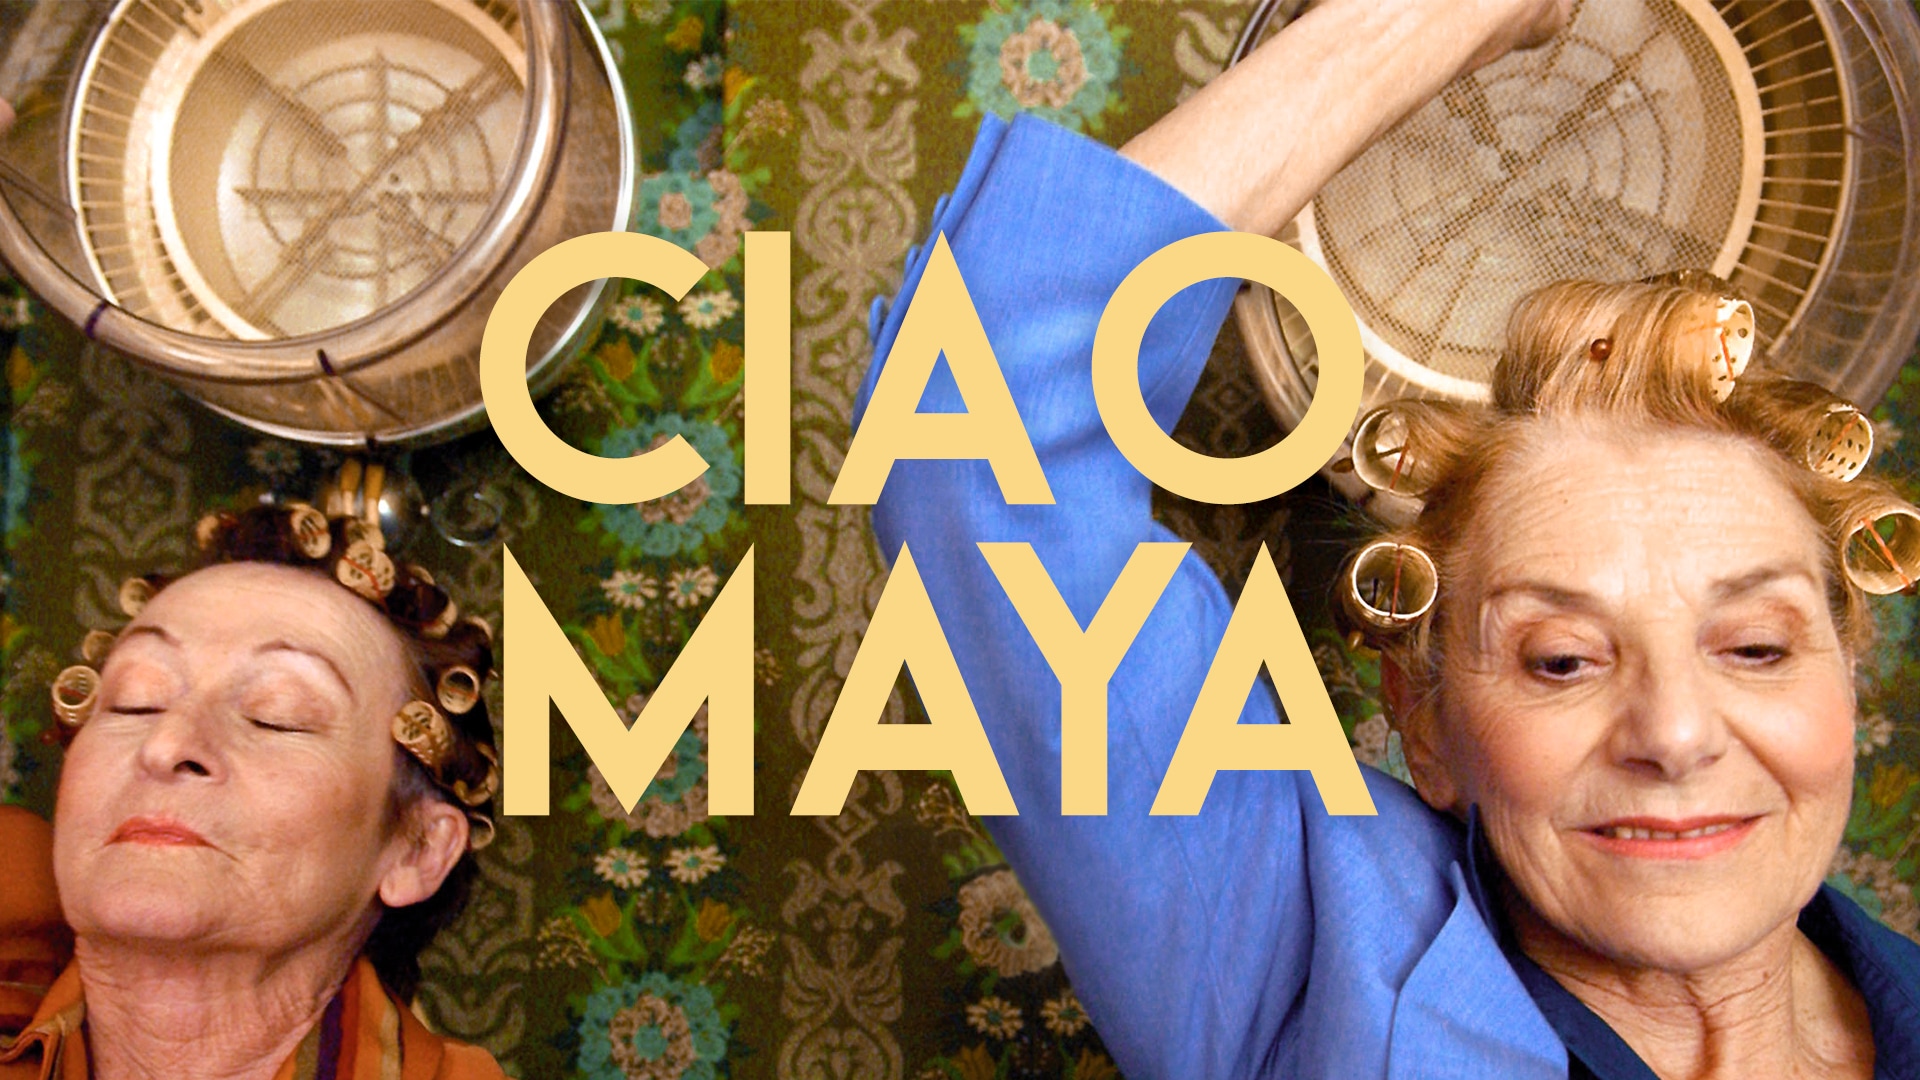 Ciao Maya